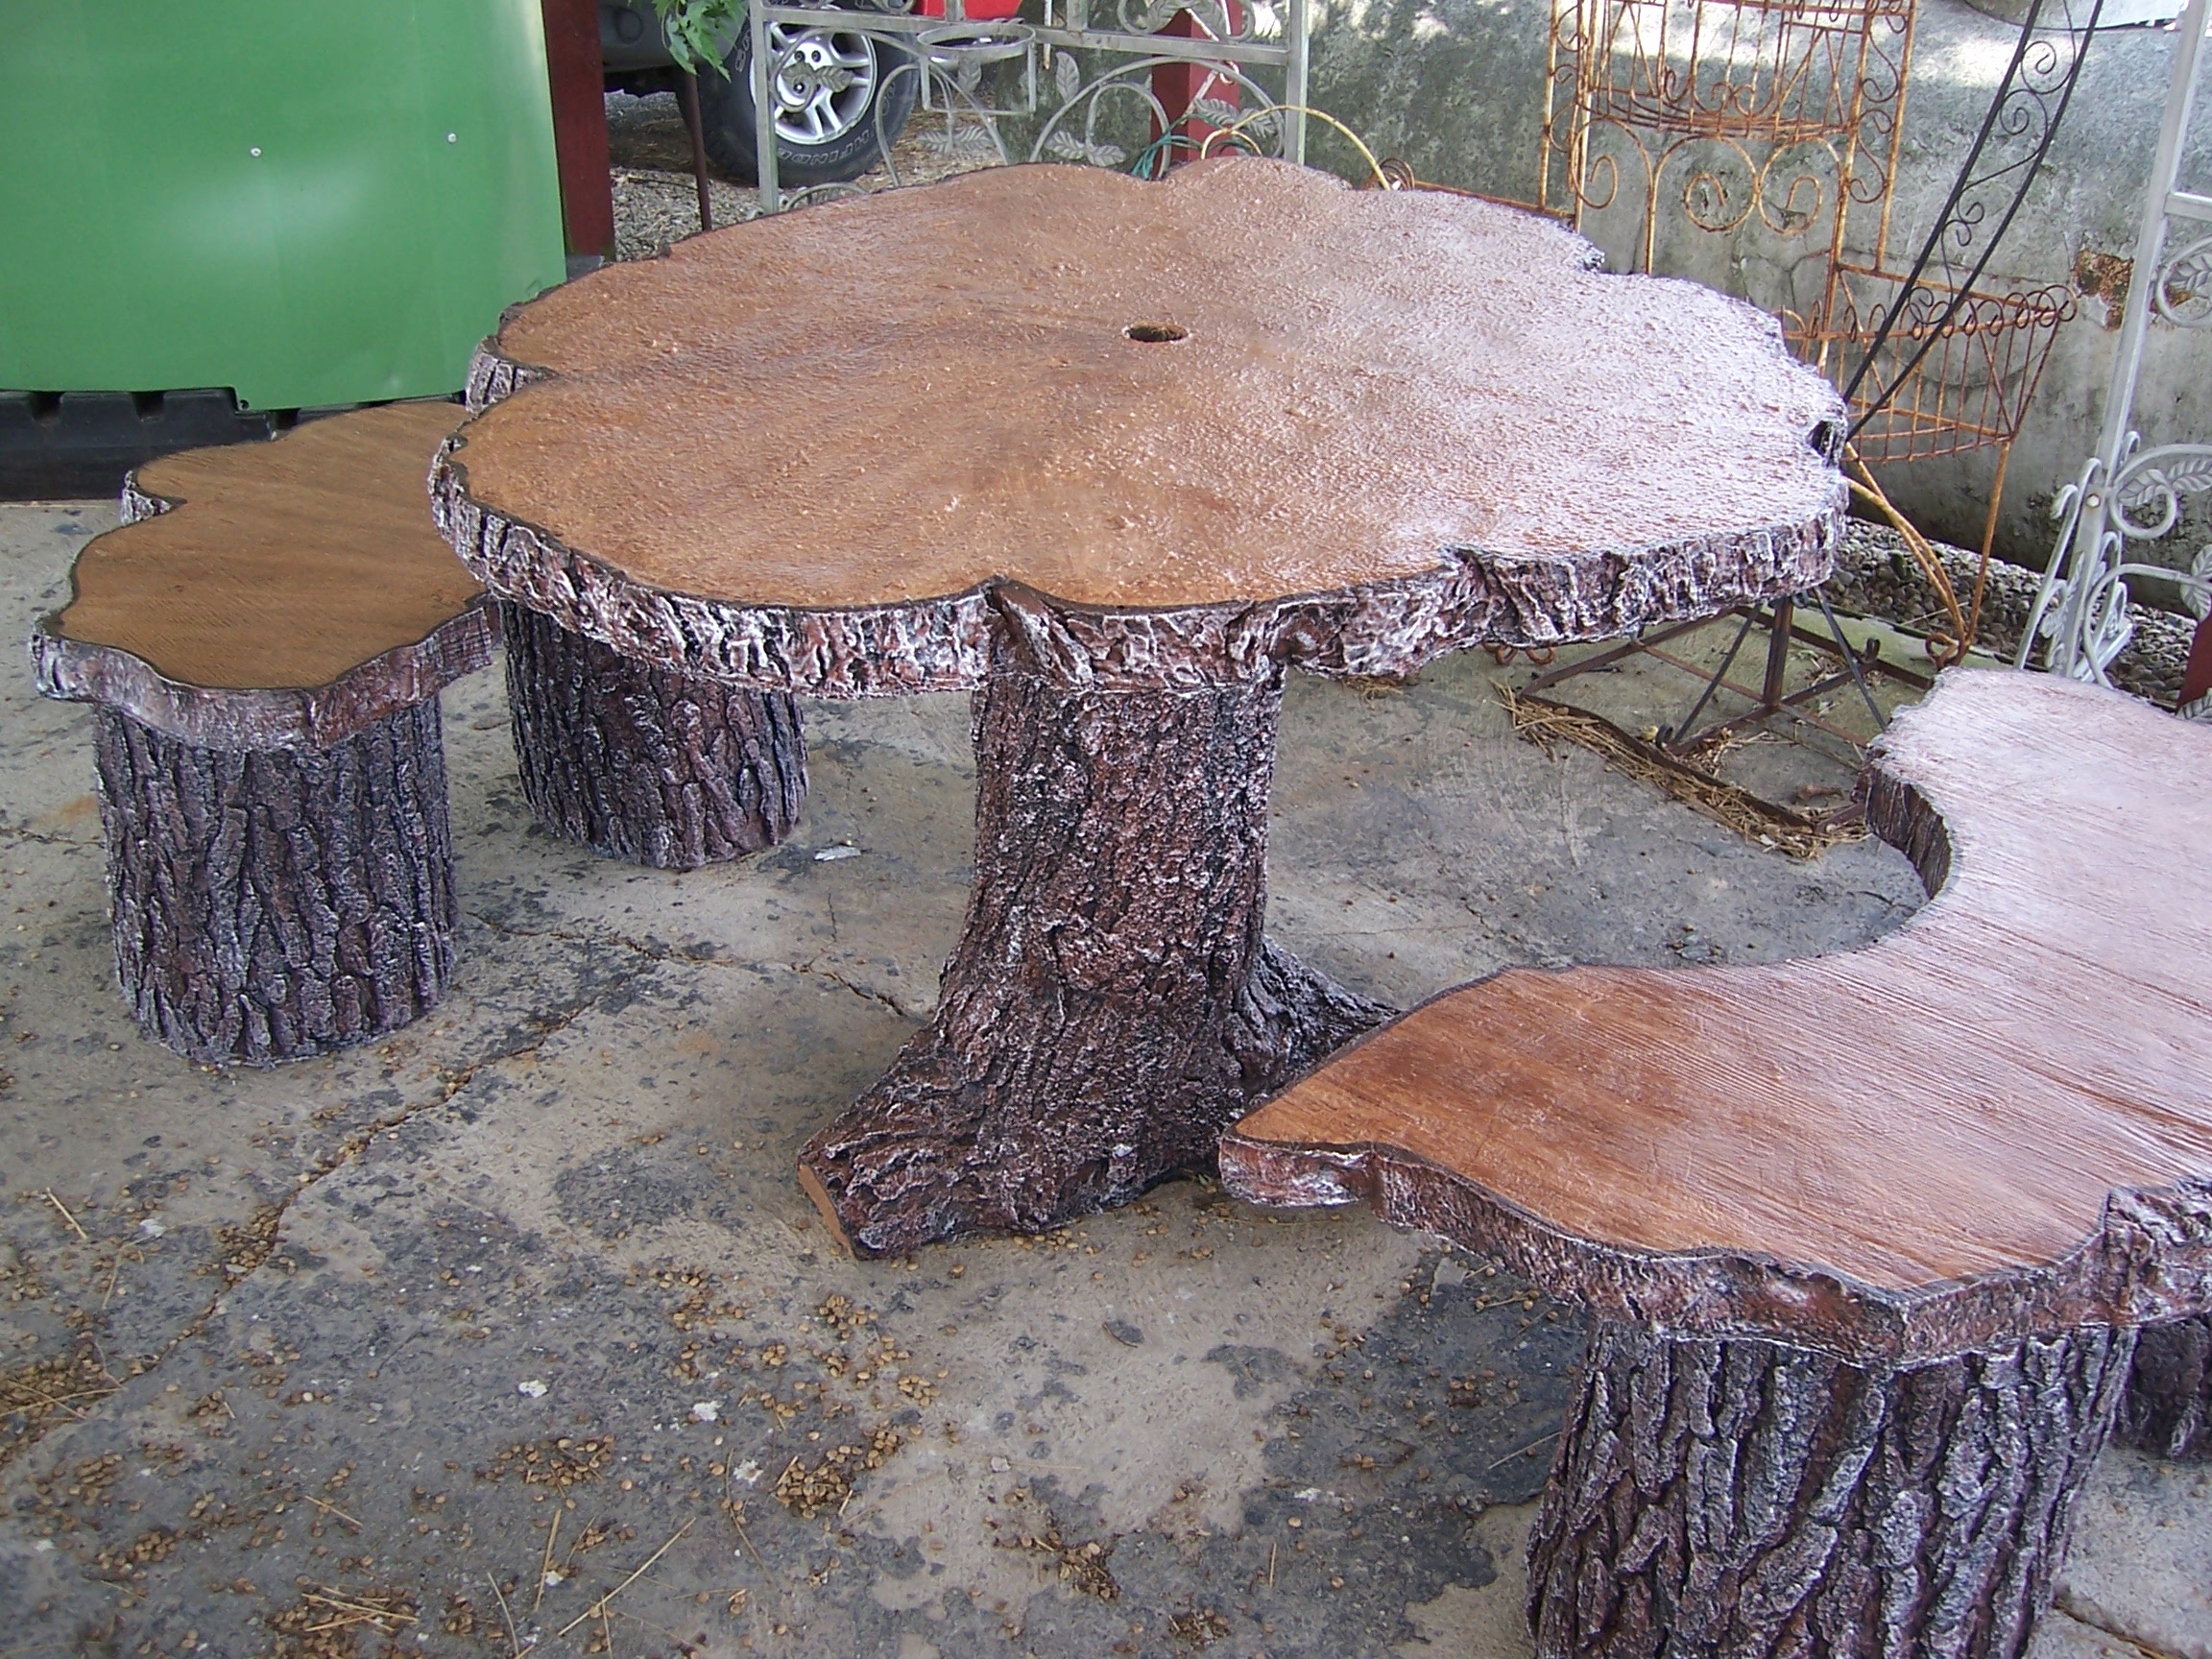 tree slab kitchen table poured